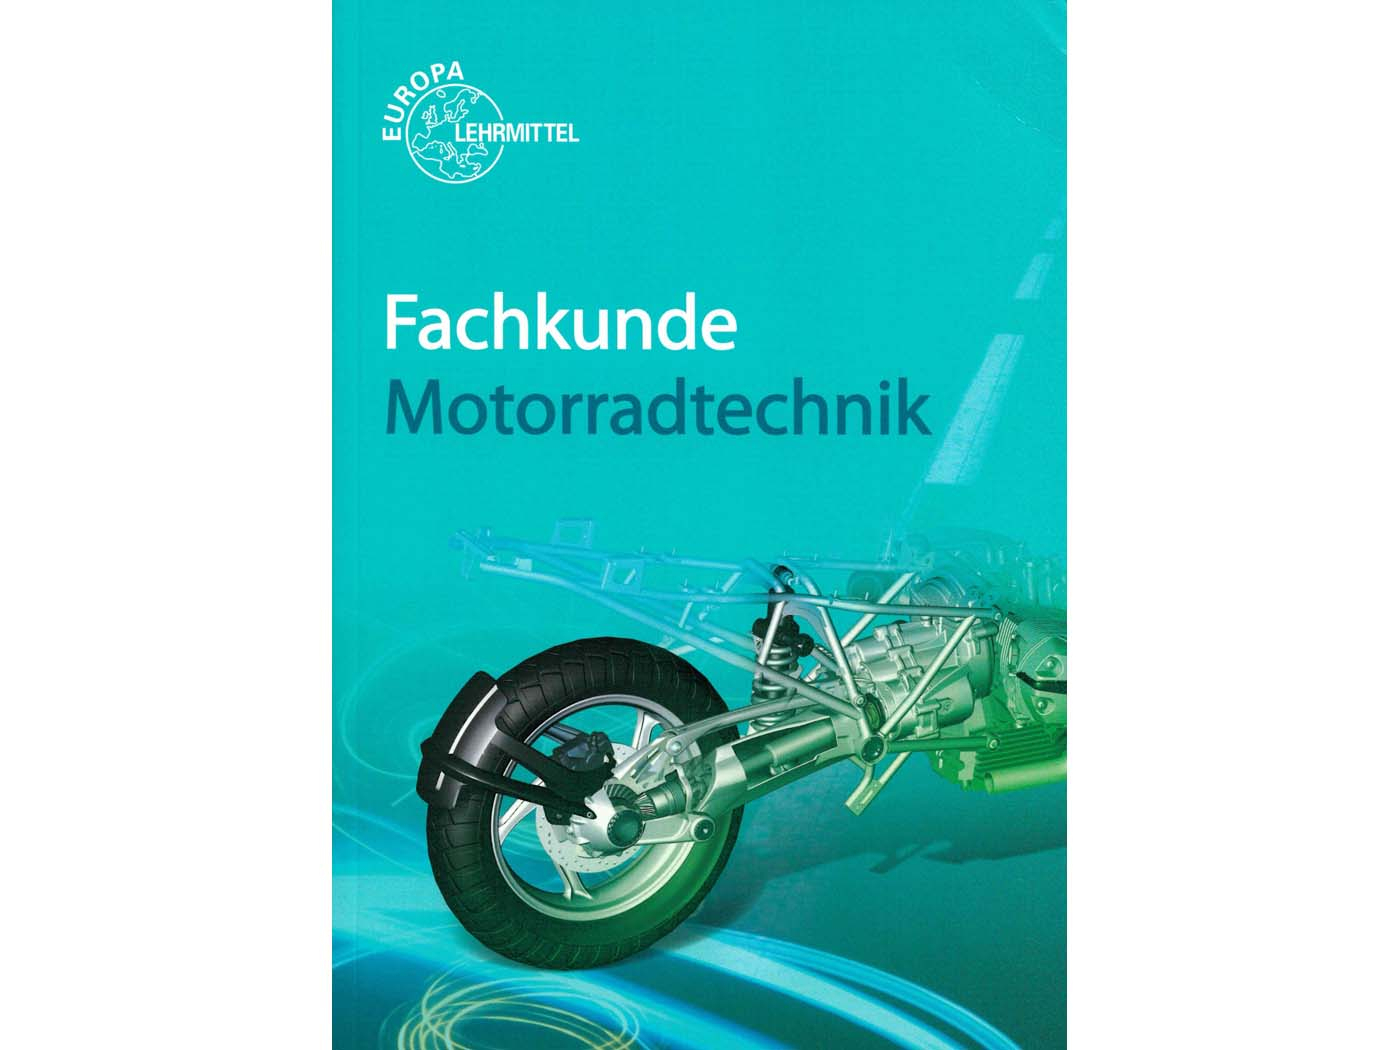 Zweirad Motorrad Mechaniker Schule Fachkunde Motorradtechnik Textbook